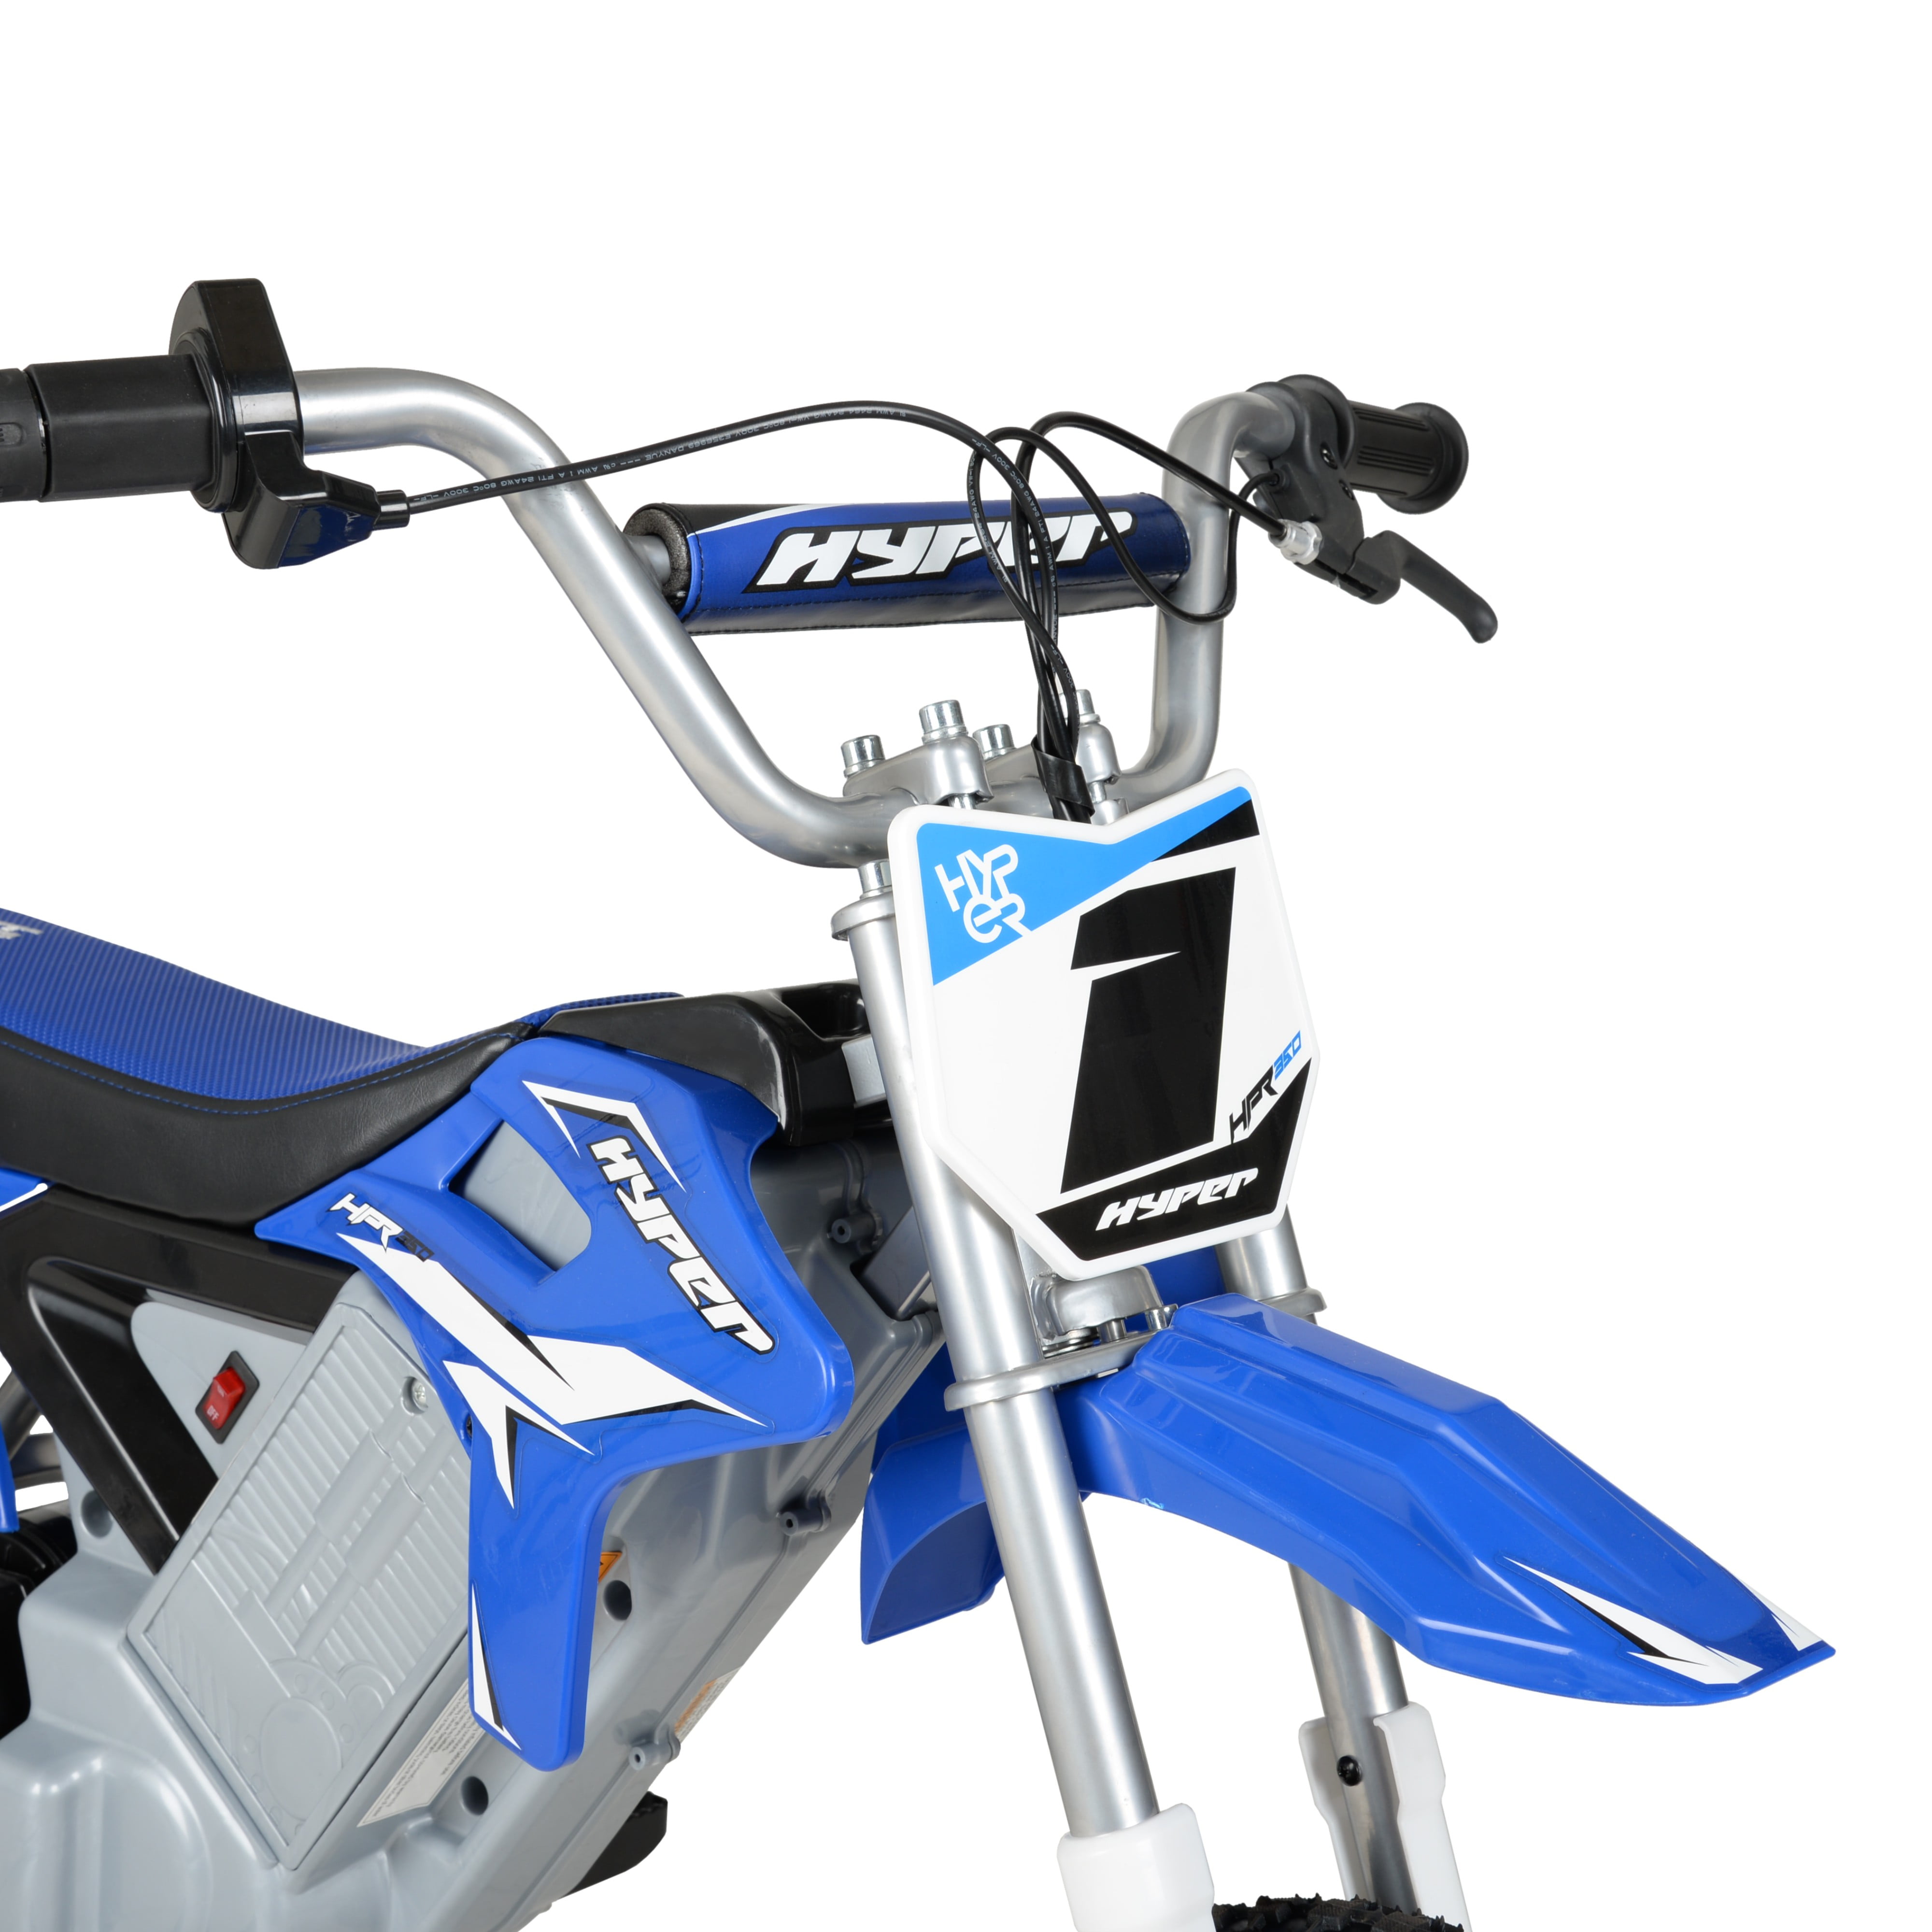 blue electric dirt bike